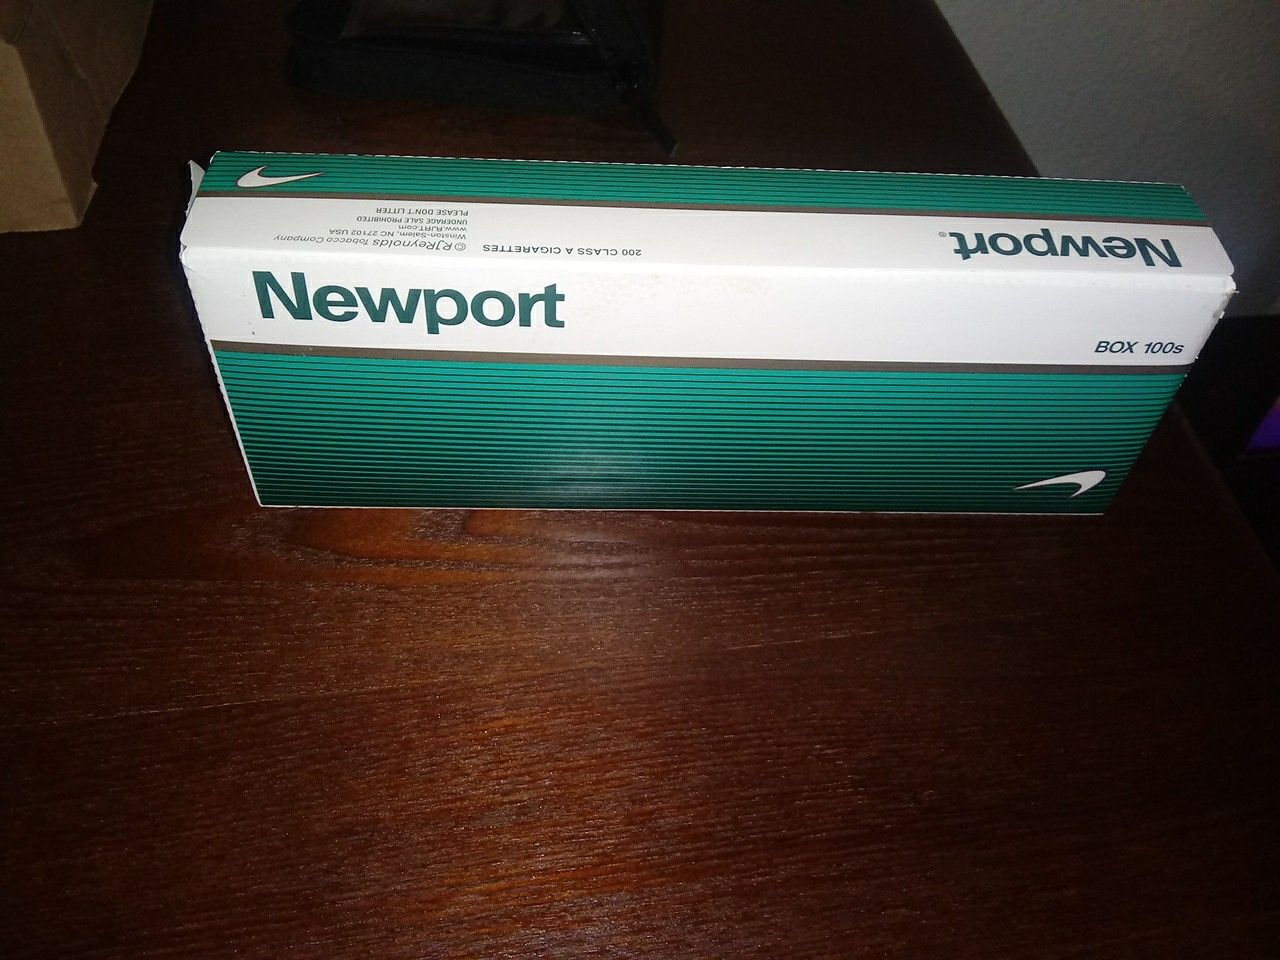 Newport carton